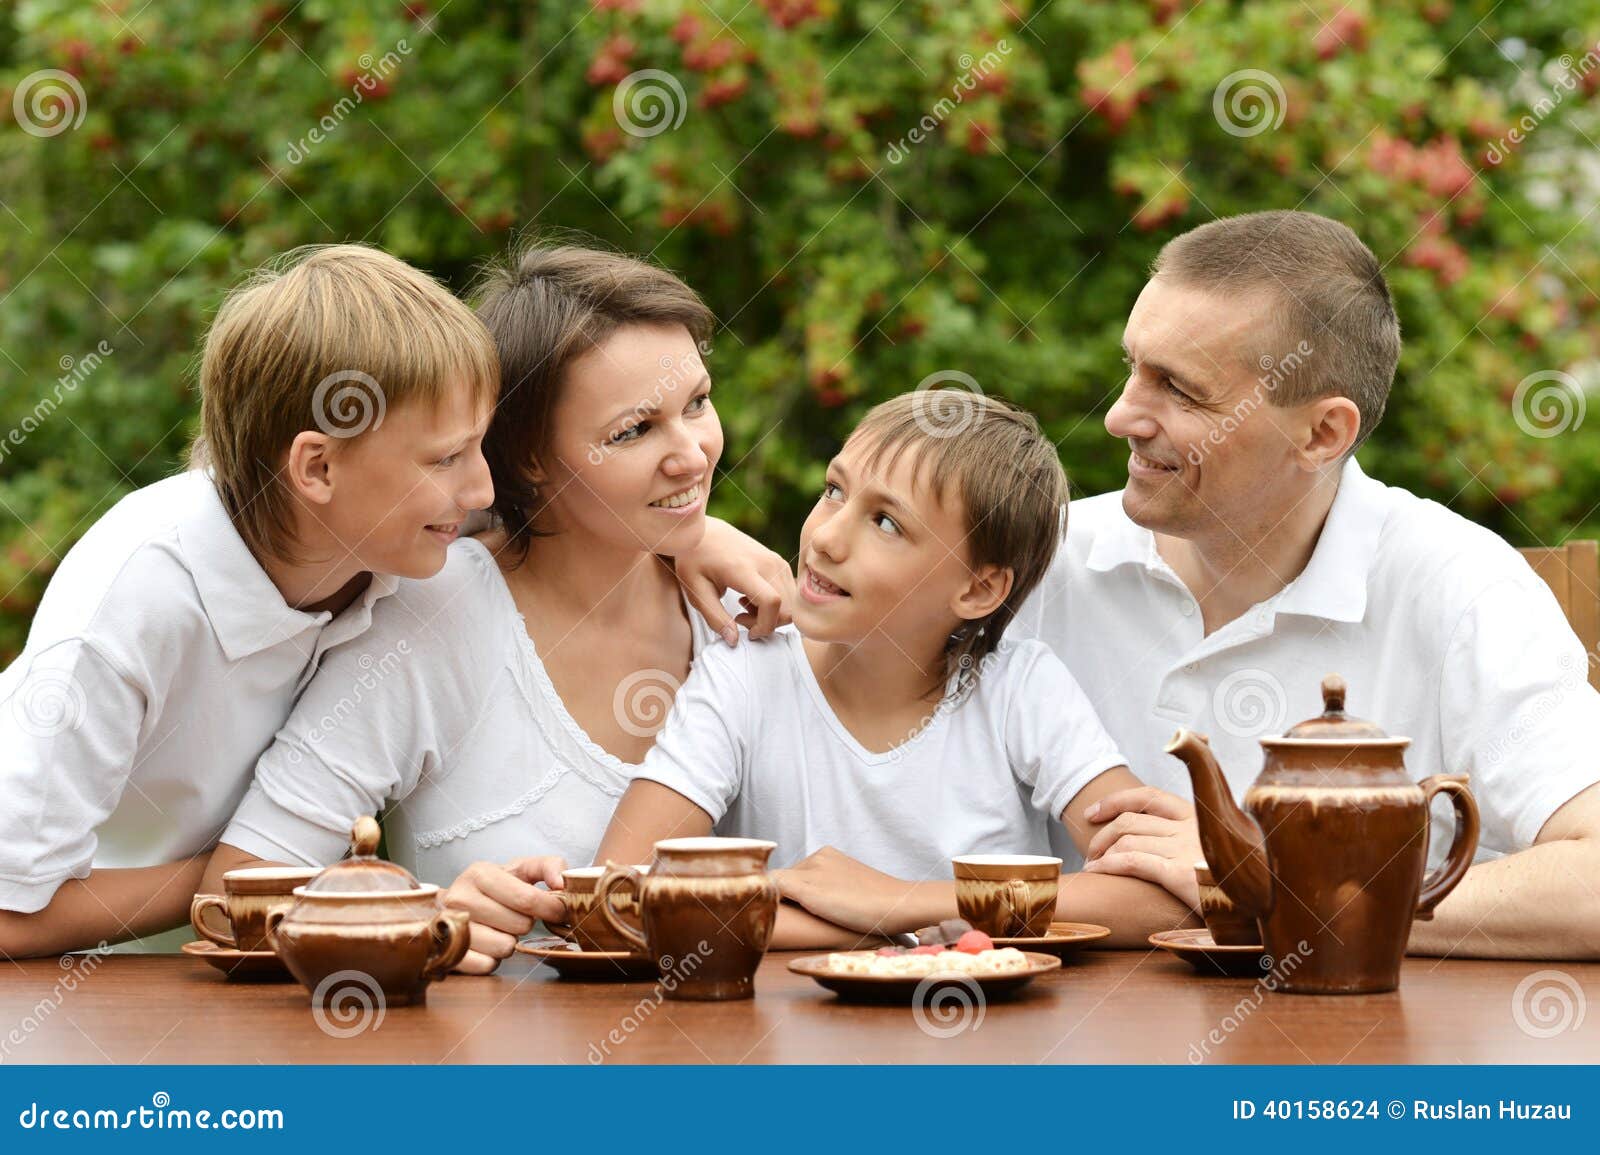 Happy family drinking tea in the garden in summer